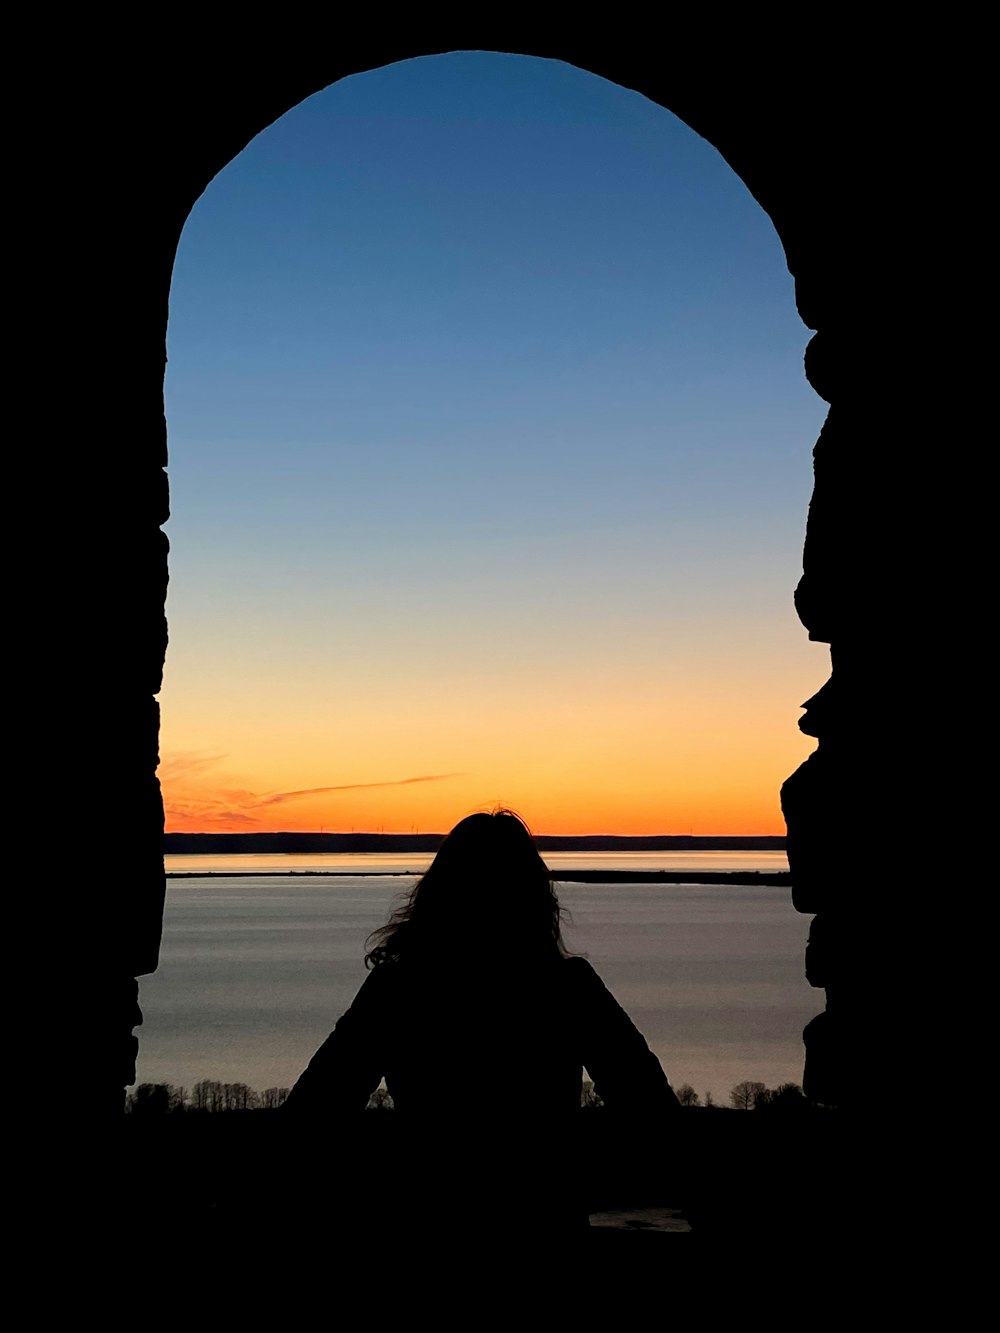 una silhouette di una persona seduta davanti a una finestra